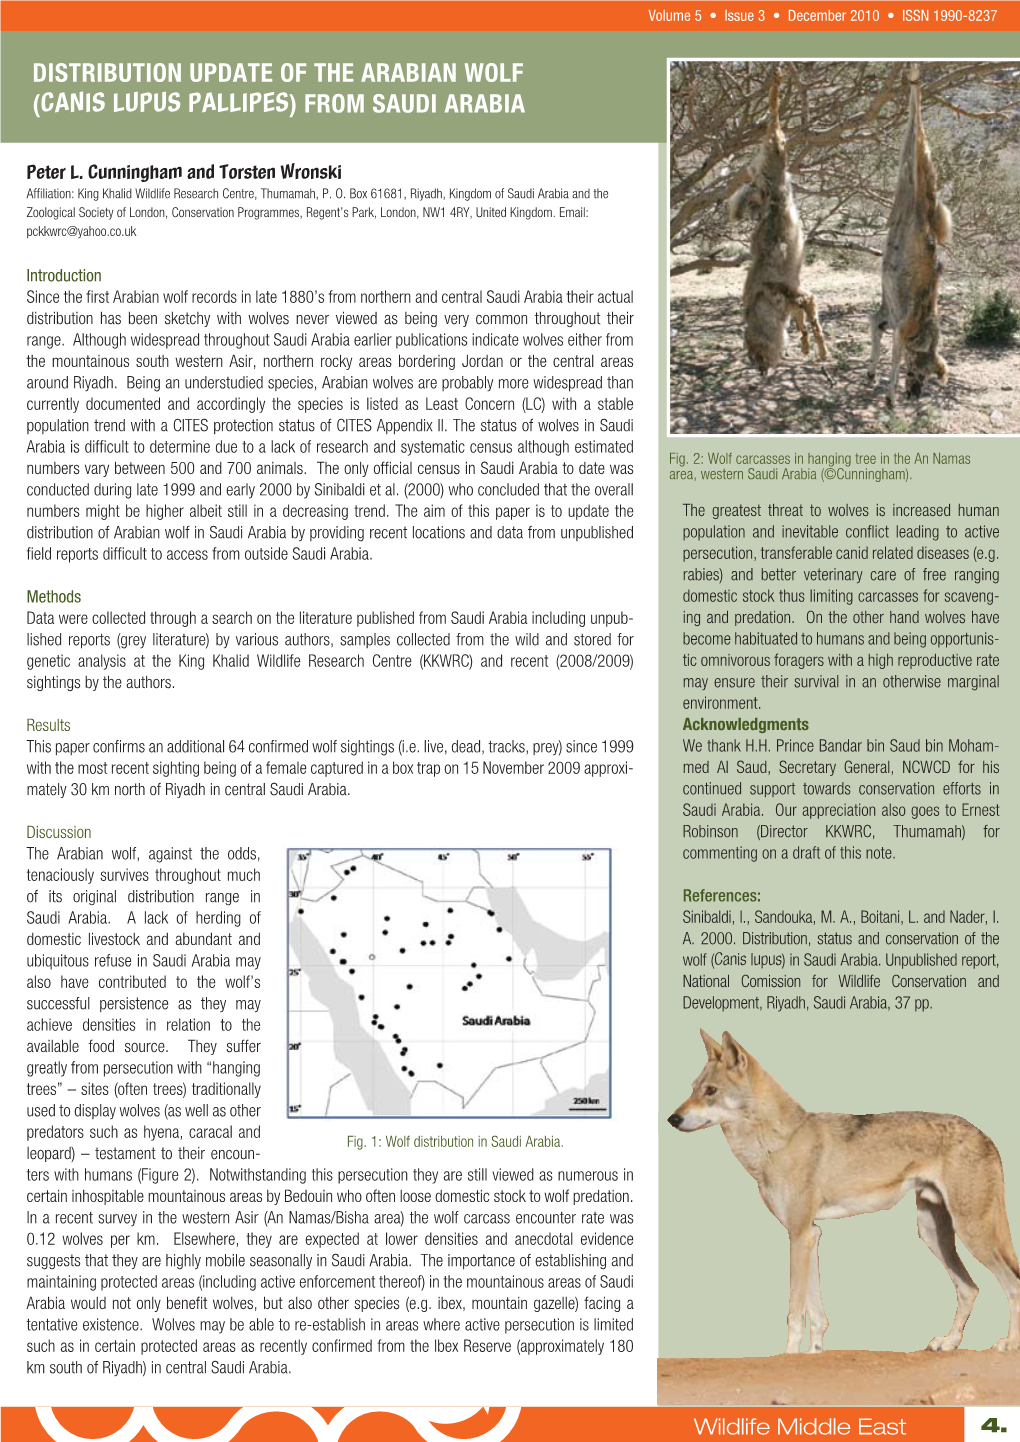 Distribution Update of the Arabian Wolf (Canis Lupus Pallipes) from Saudi Arabia